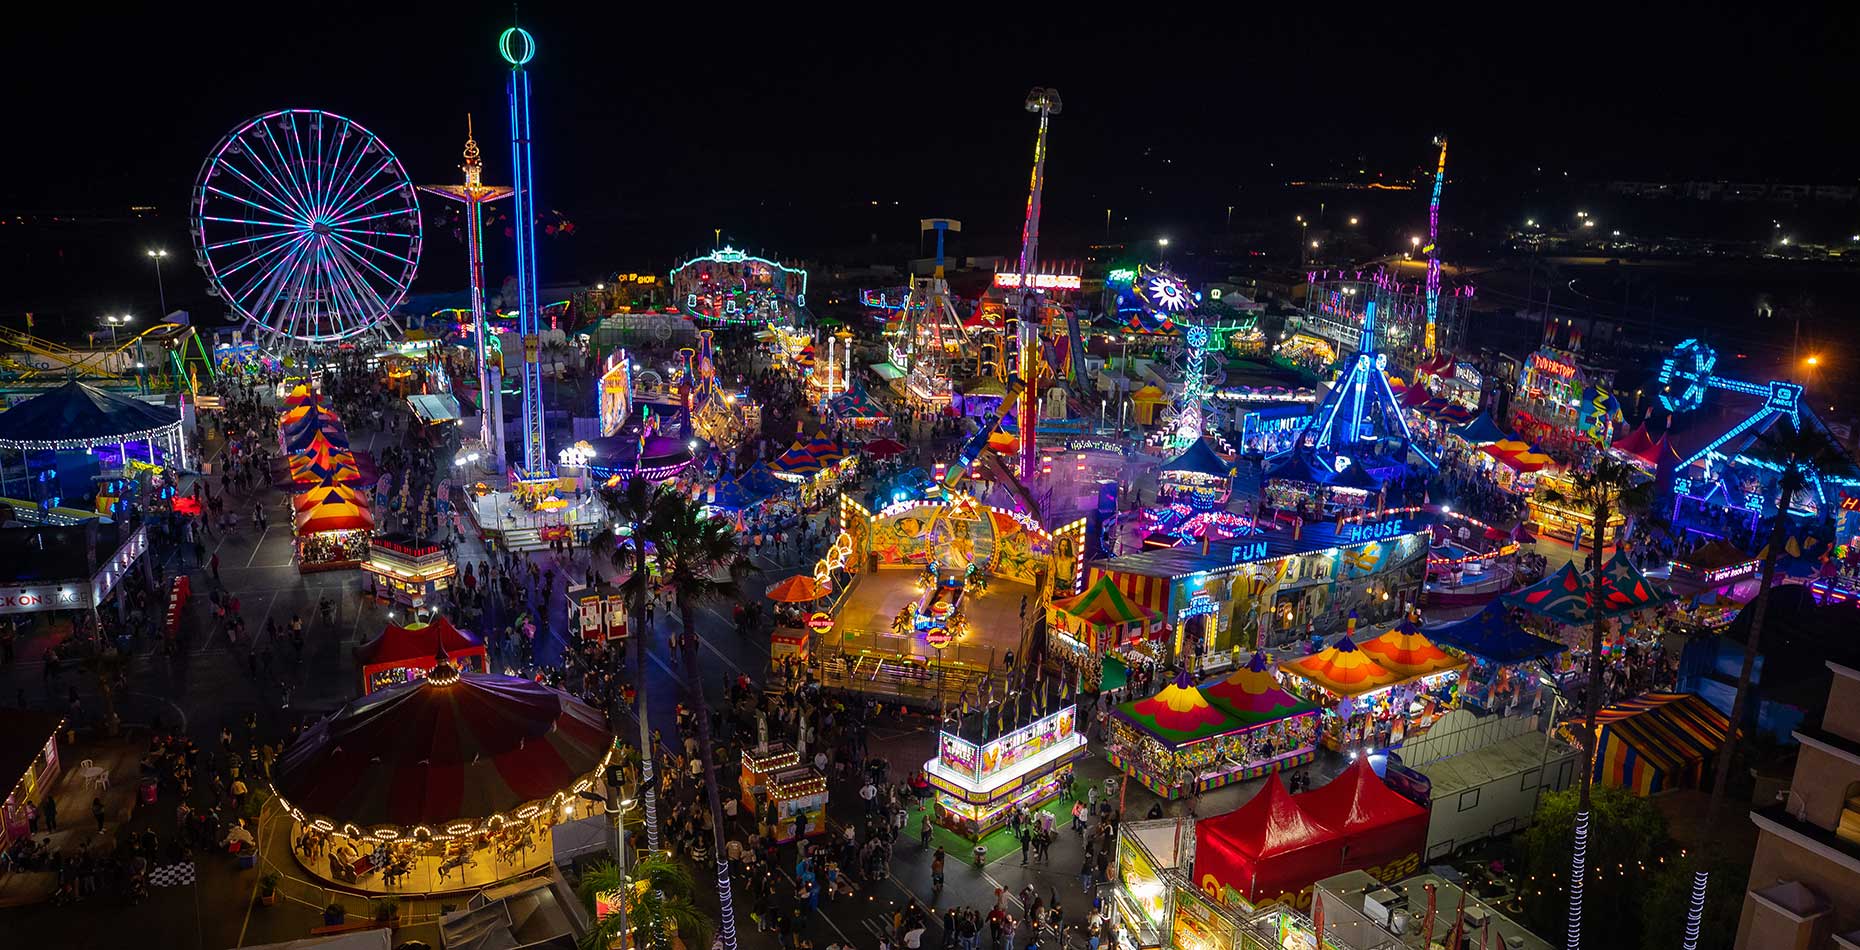 San Diego County Fair Fun Zone at Night